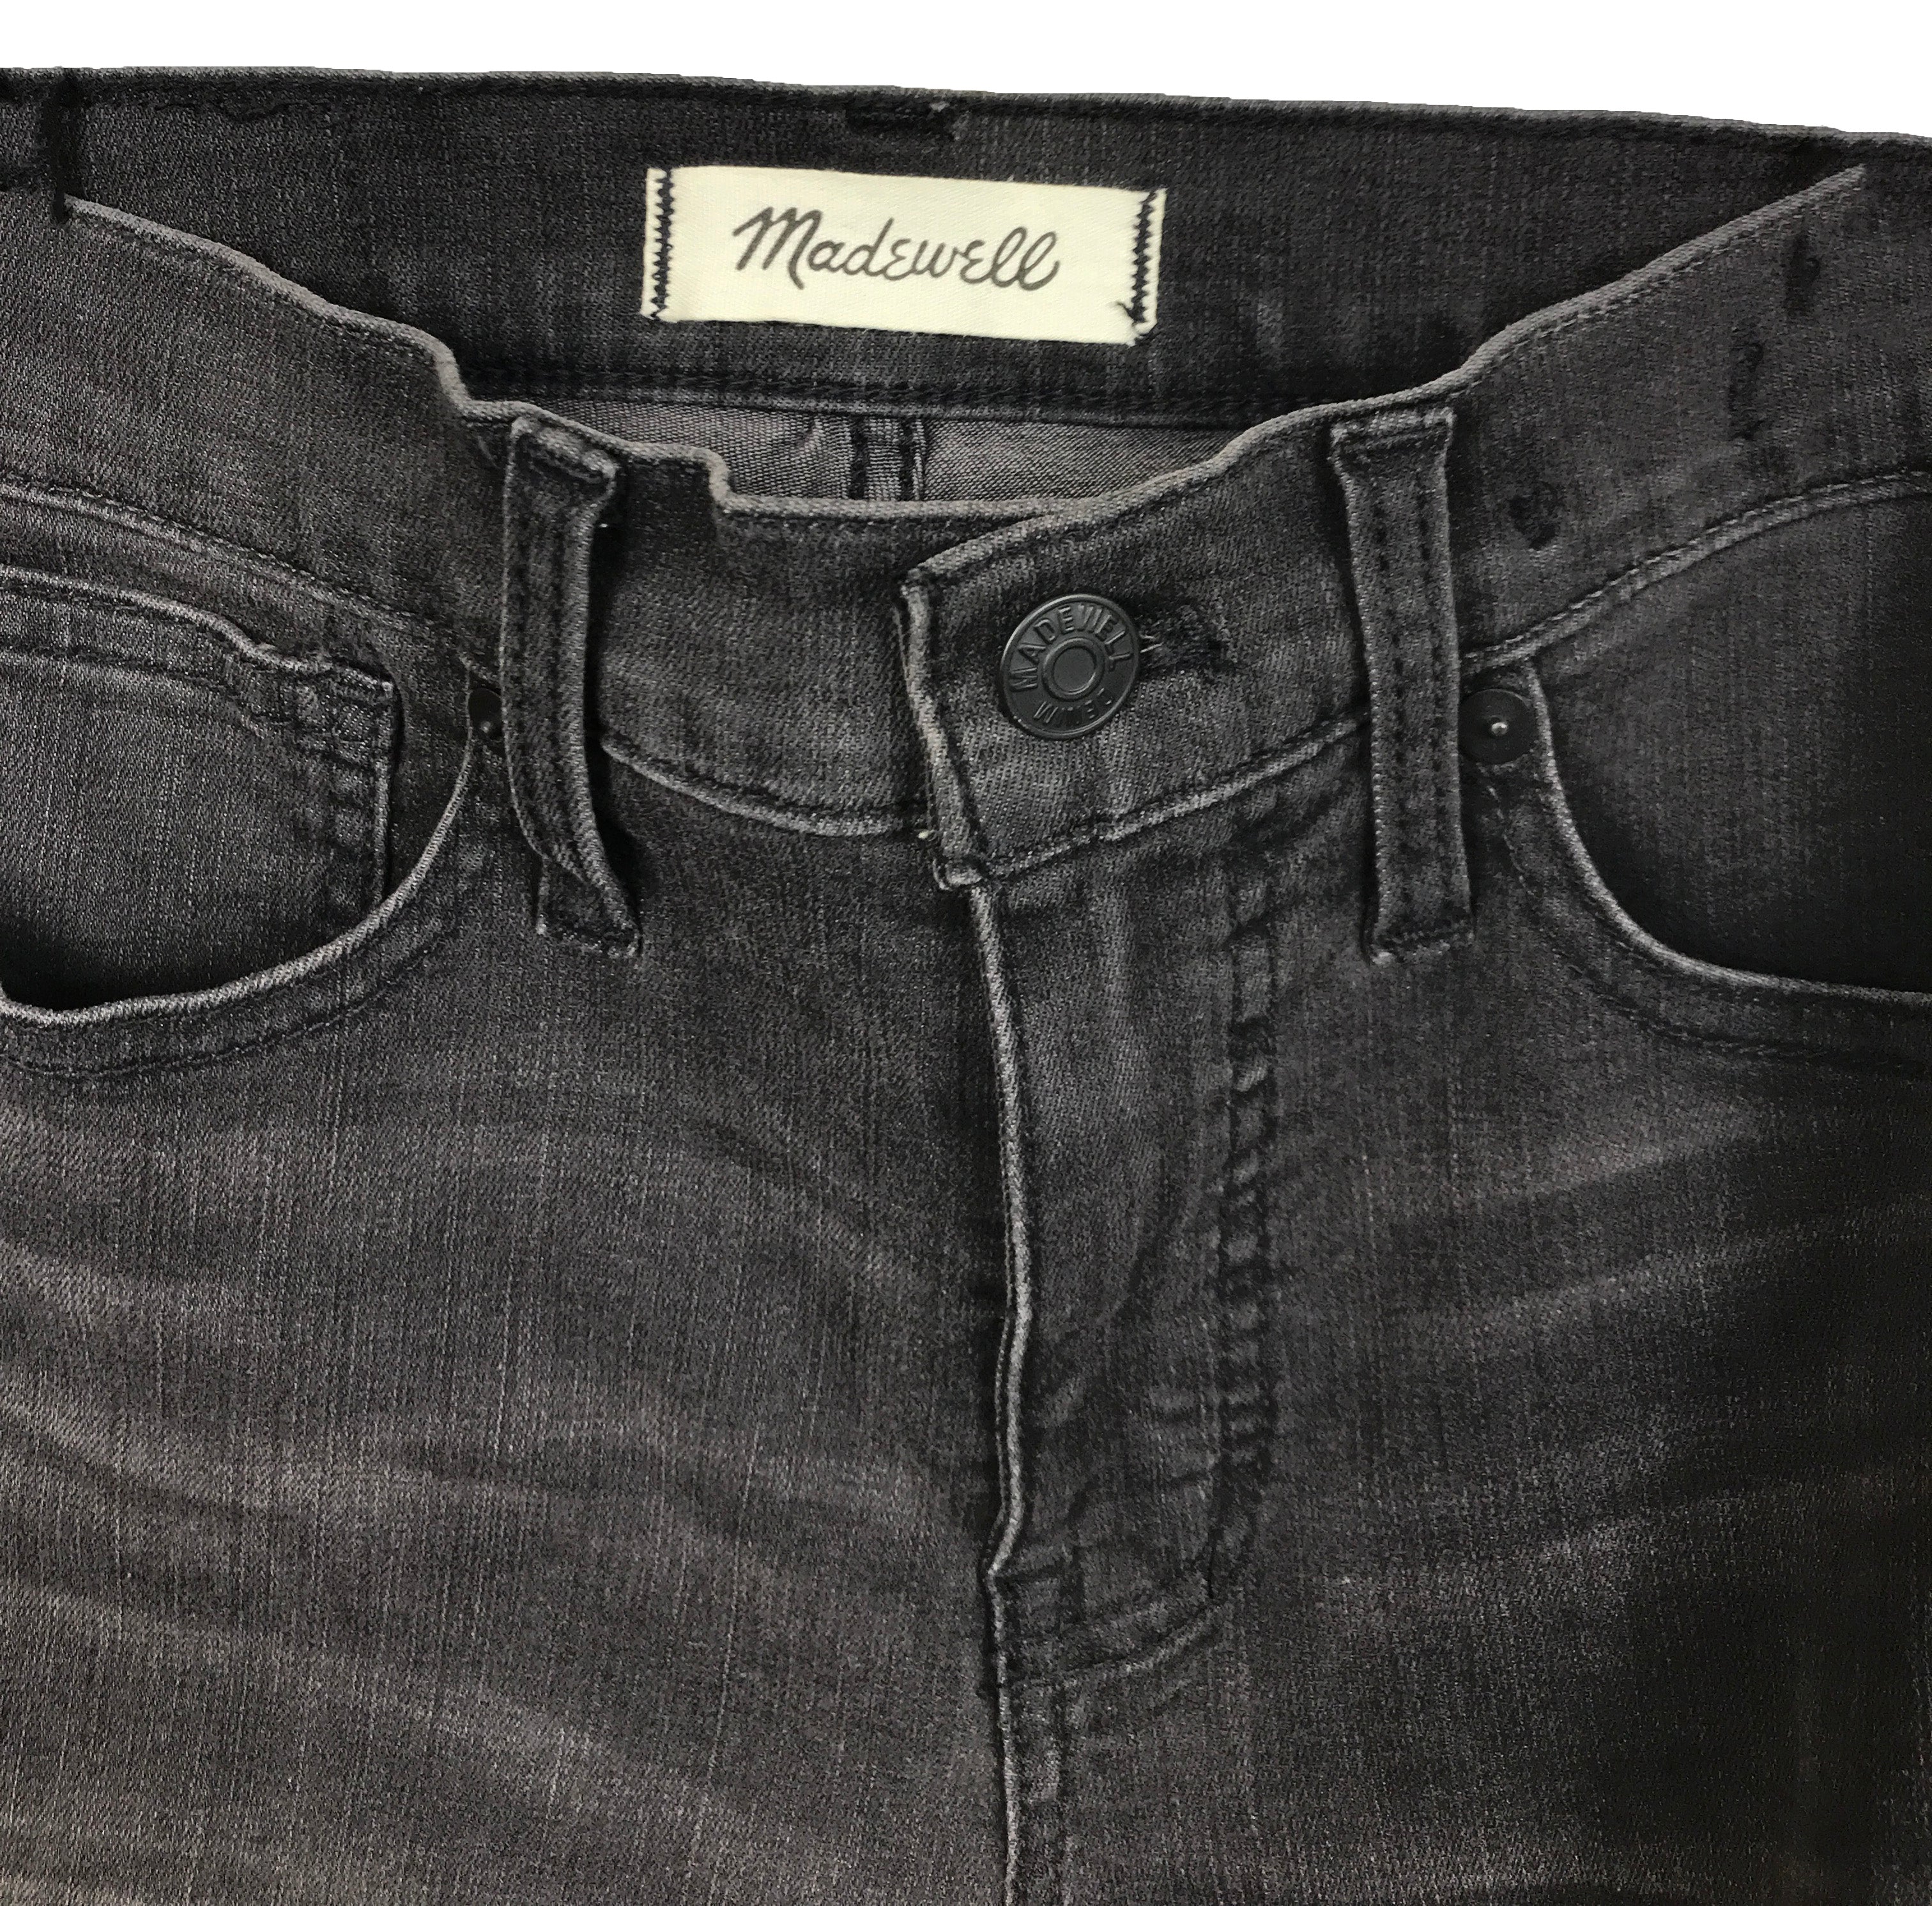 Madewell Black Skinny Women's Size 25 Jeans